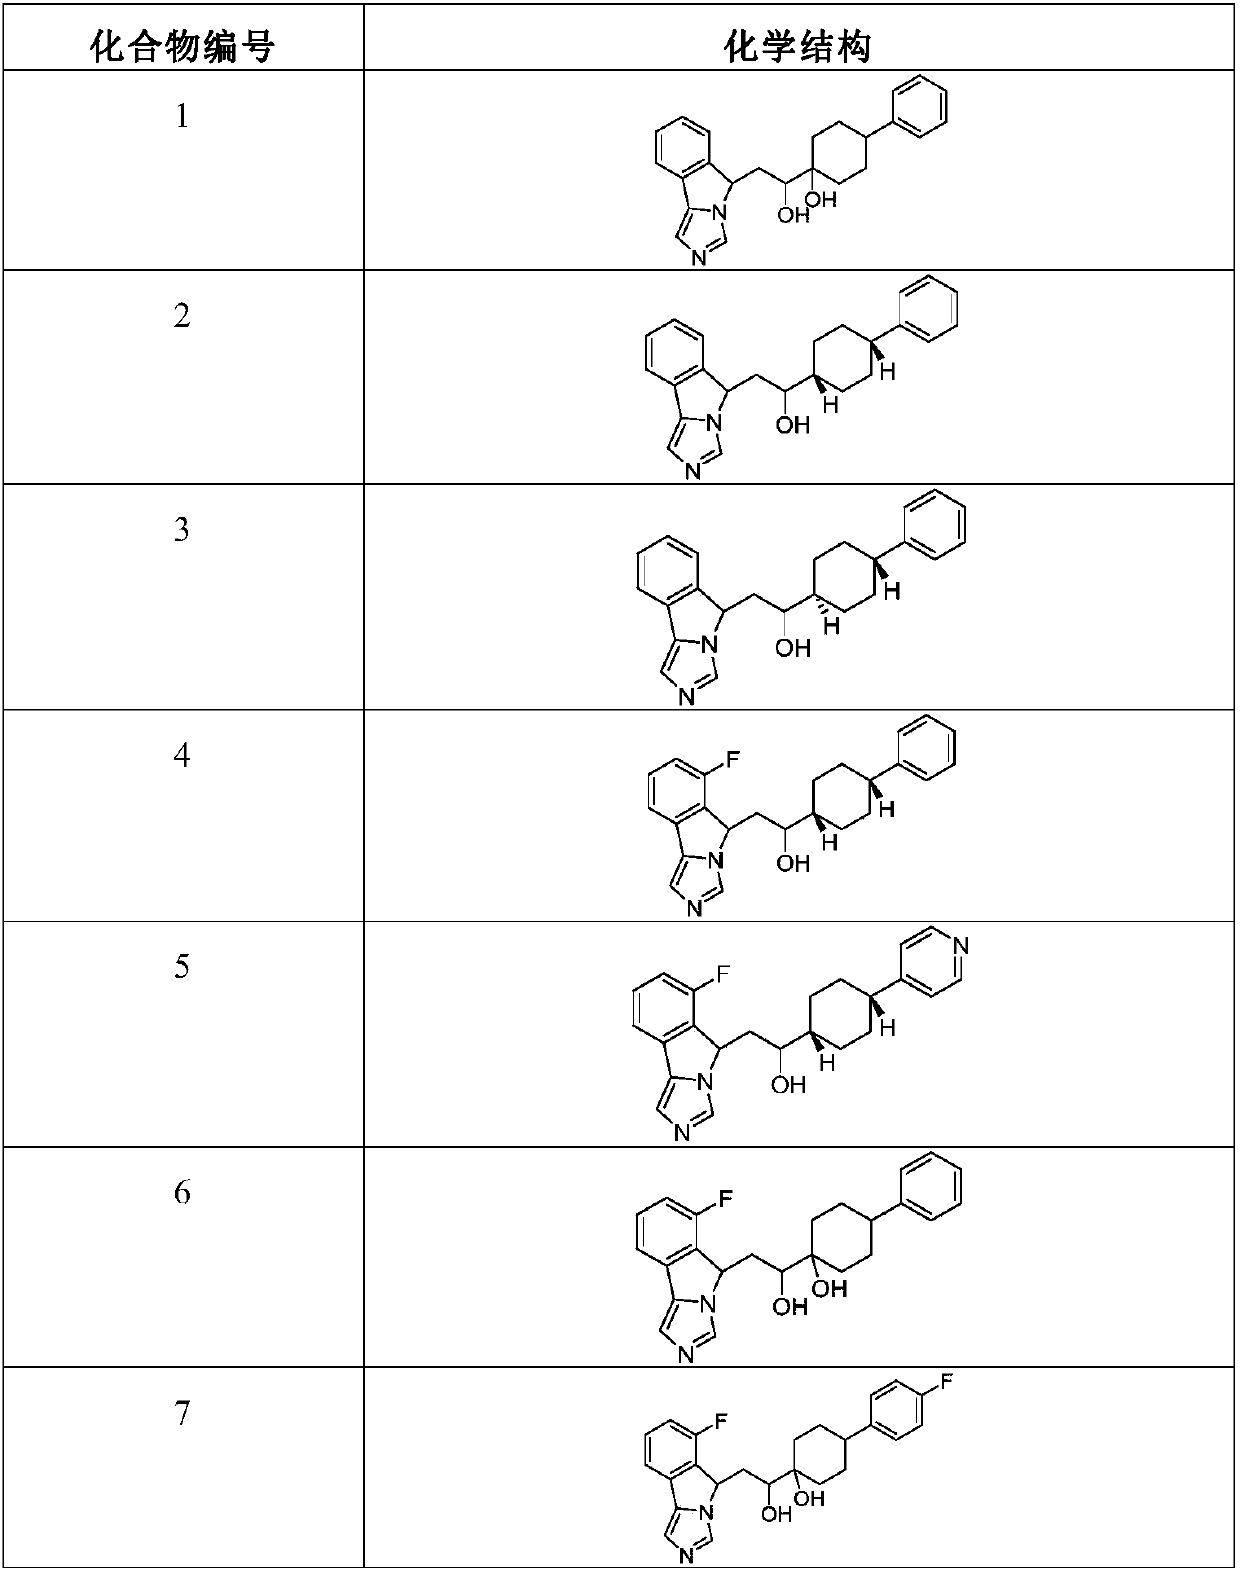 Indoleamine 2,3-dioxygenase inhibitor and uses thereof in pharmacy